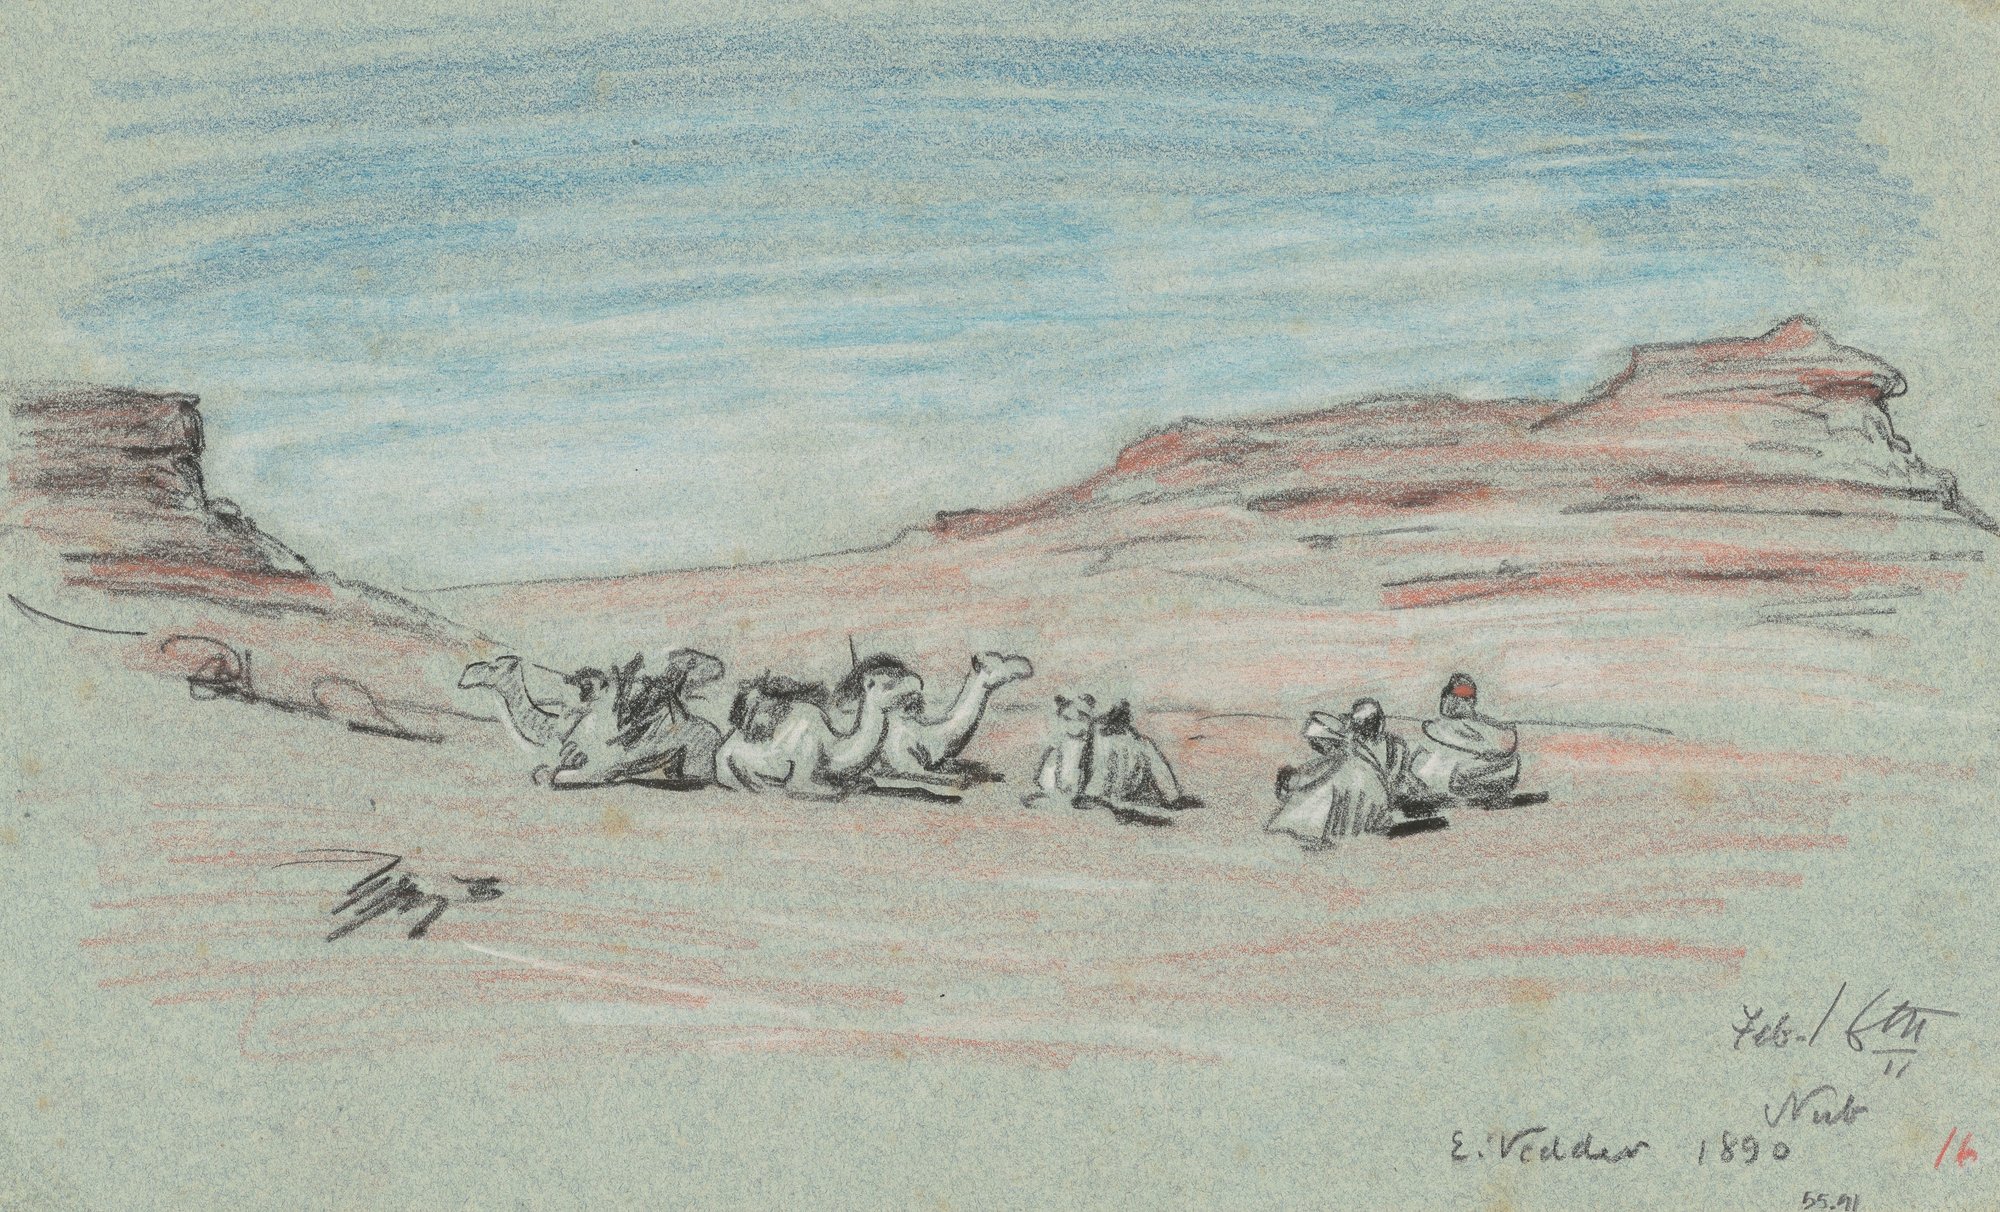 Nile Journey,No. 20 (1890)